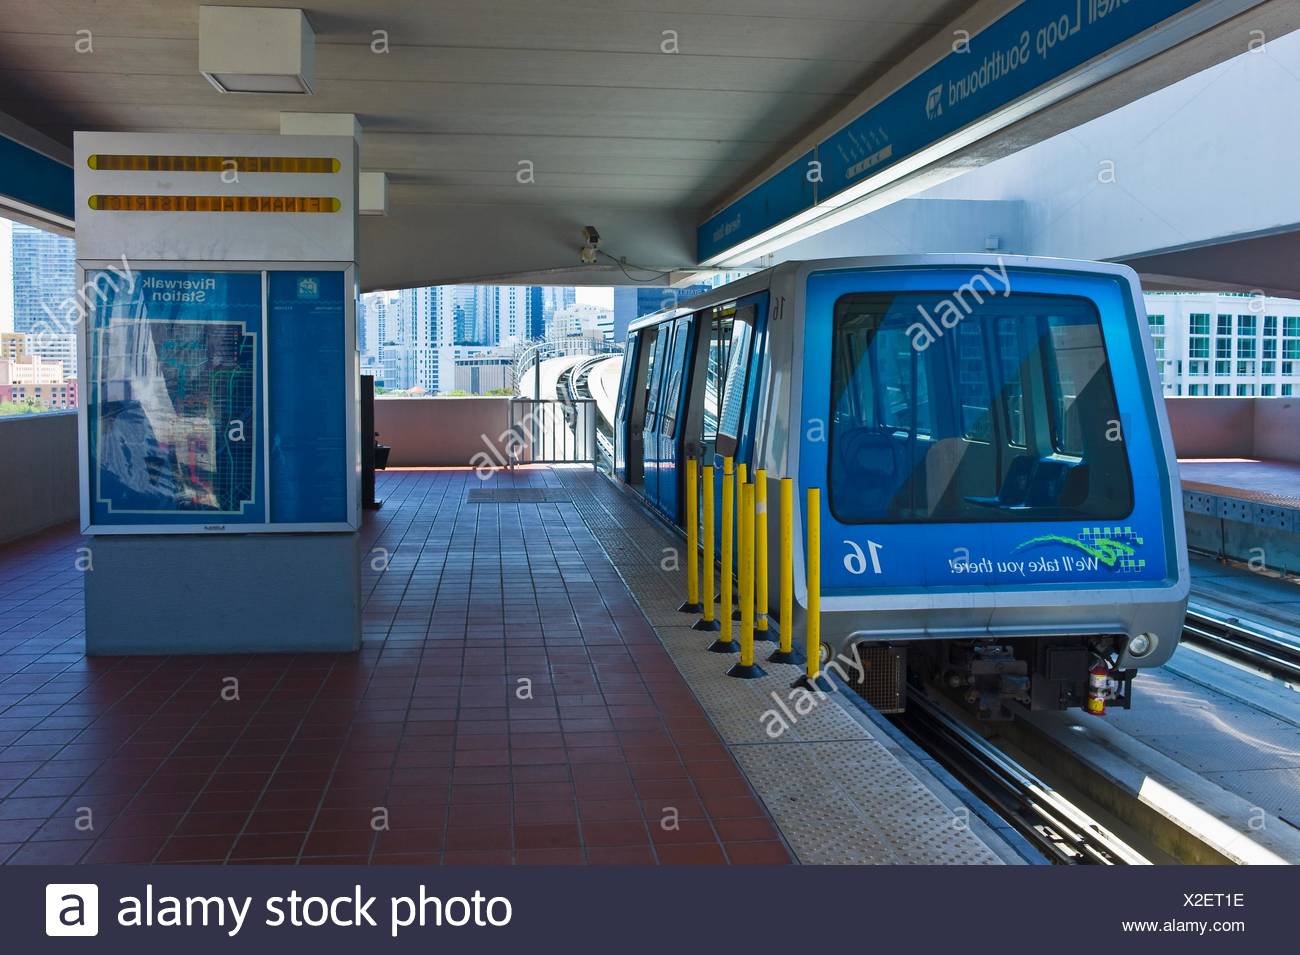 metromover-transport-system-downtown-miami-florida-usa-metromover-station-downtown-miami-florida-usa-metromover-is-a-X2ET1E.jpg